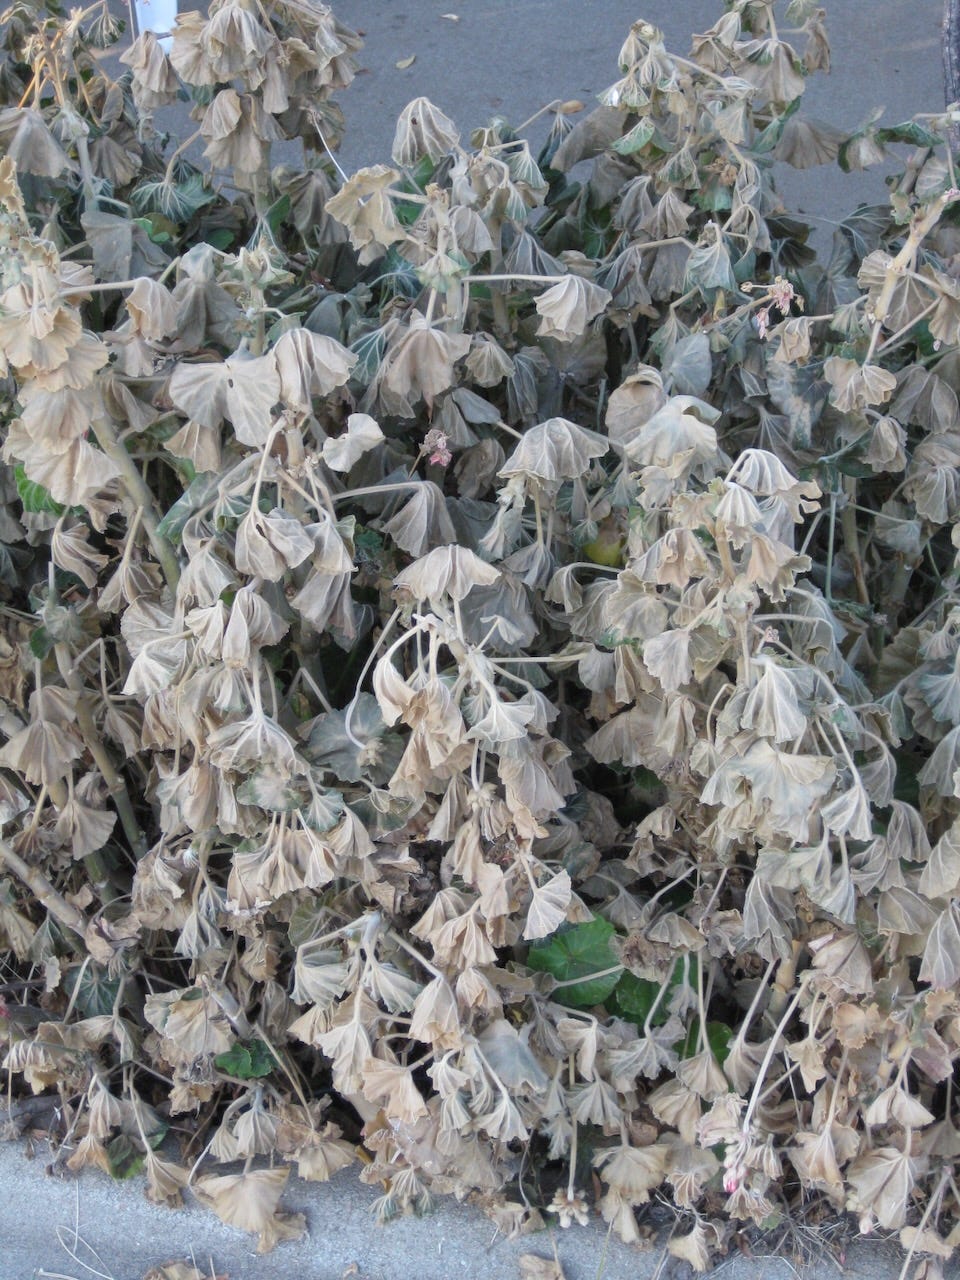 Frostbitten pelargonium plant